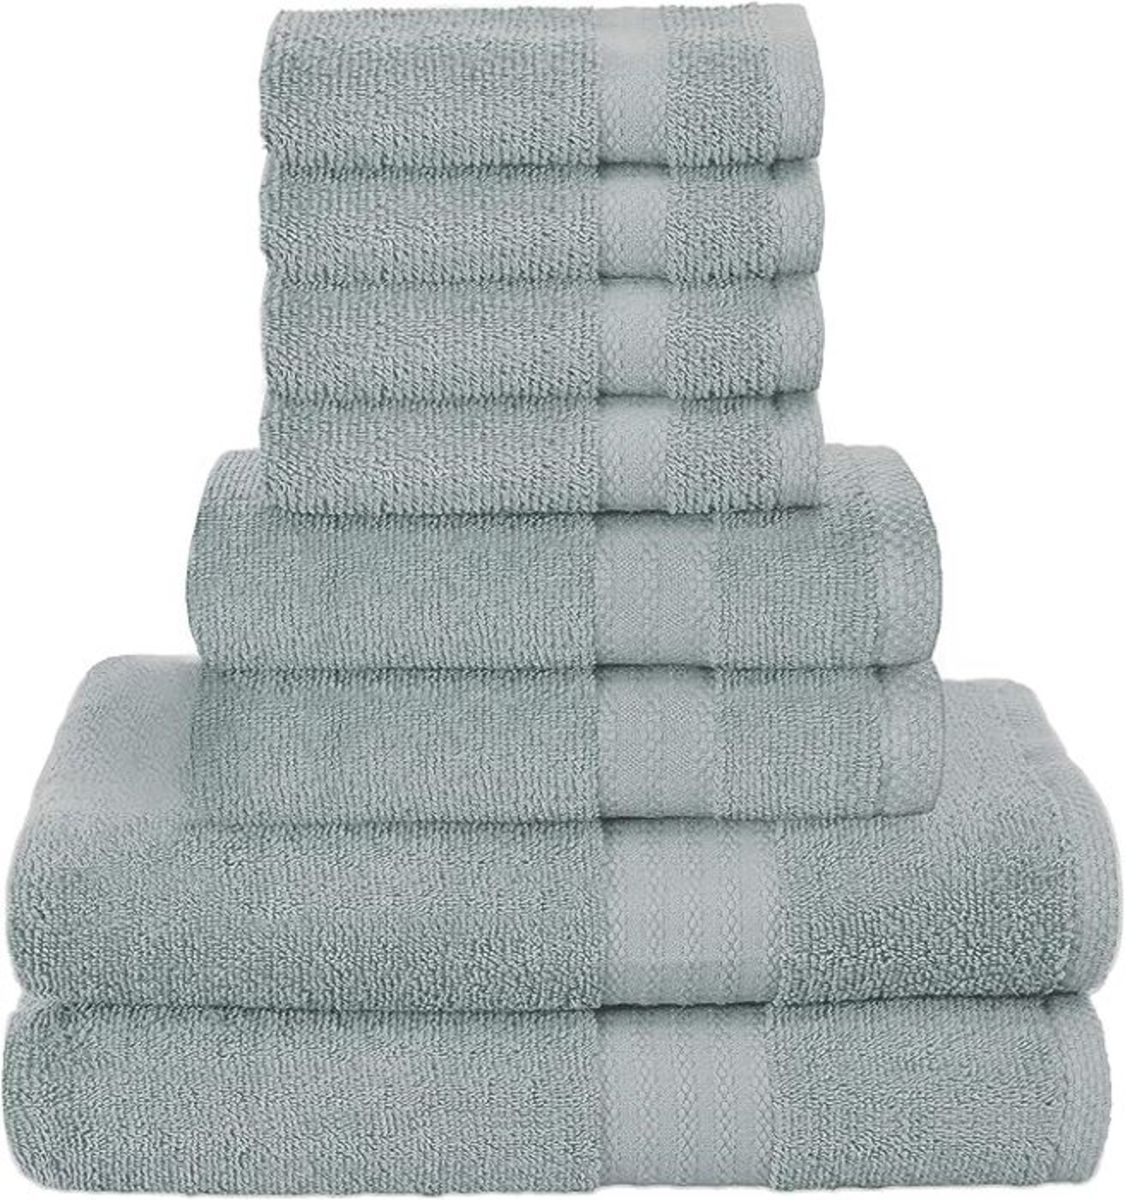 Bath Towels for sale in Atlanta, Georgia, Facebook Marketplace